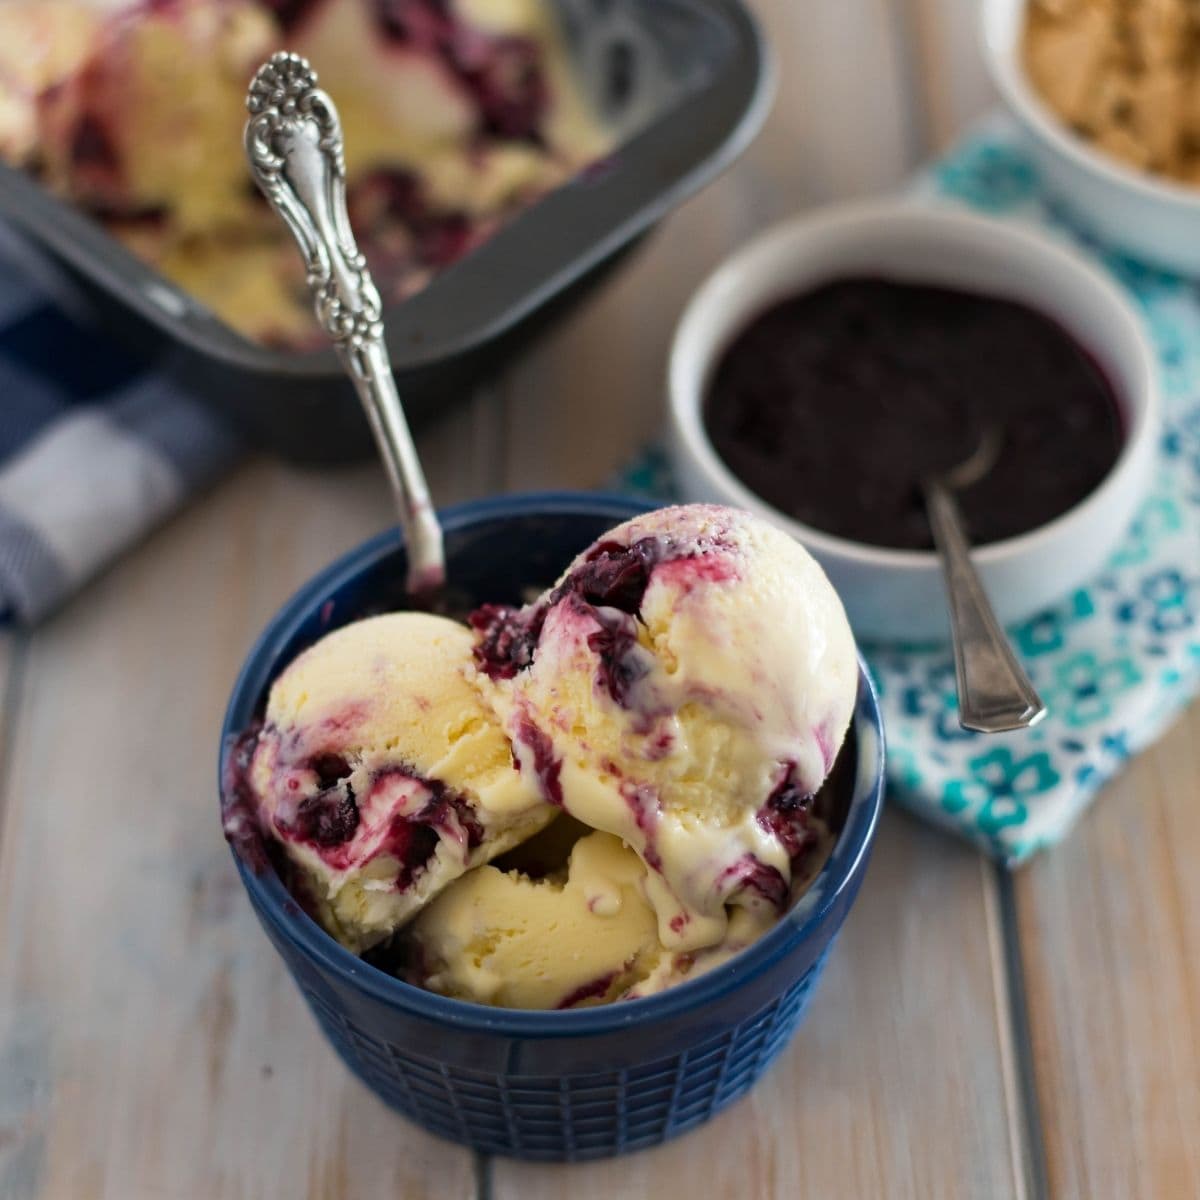 Blueberry Cheesecake Ice Cream in a blue dessert bowl.